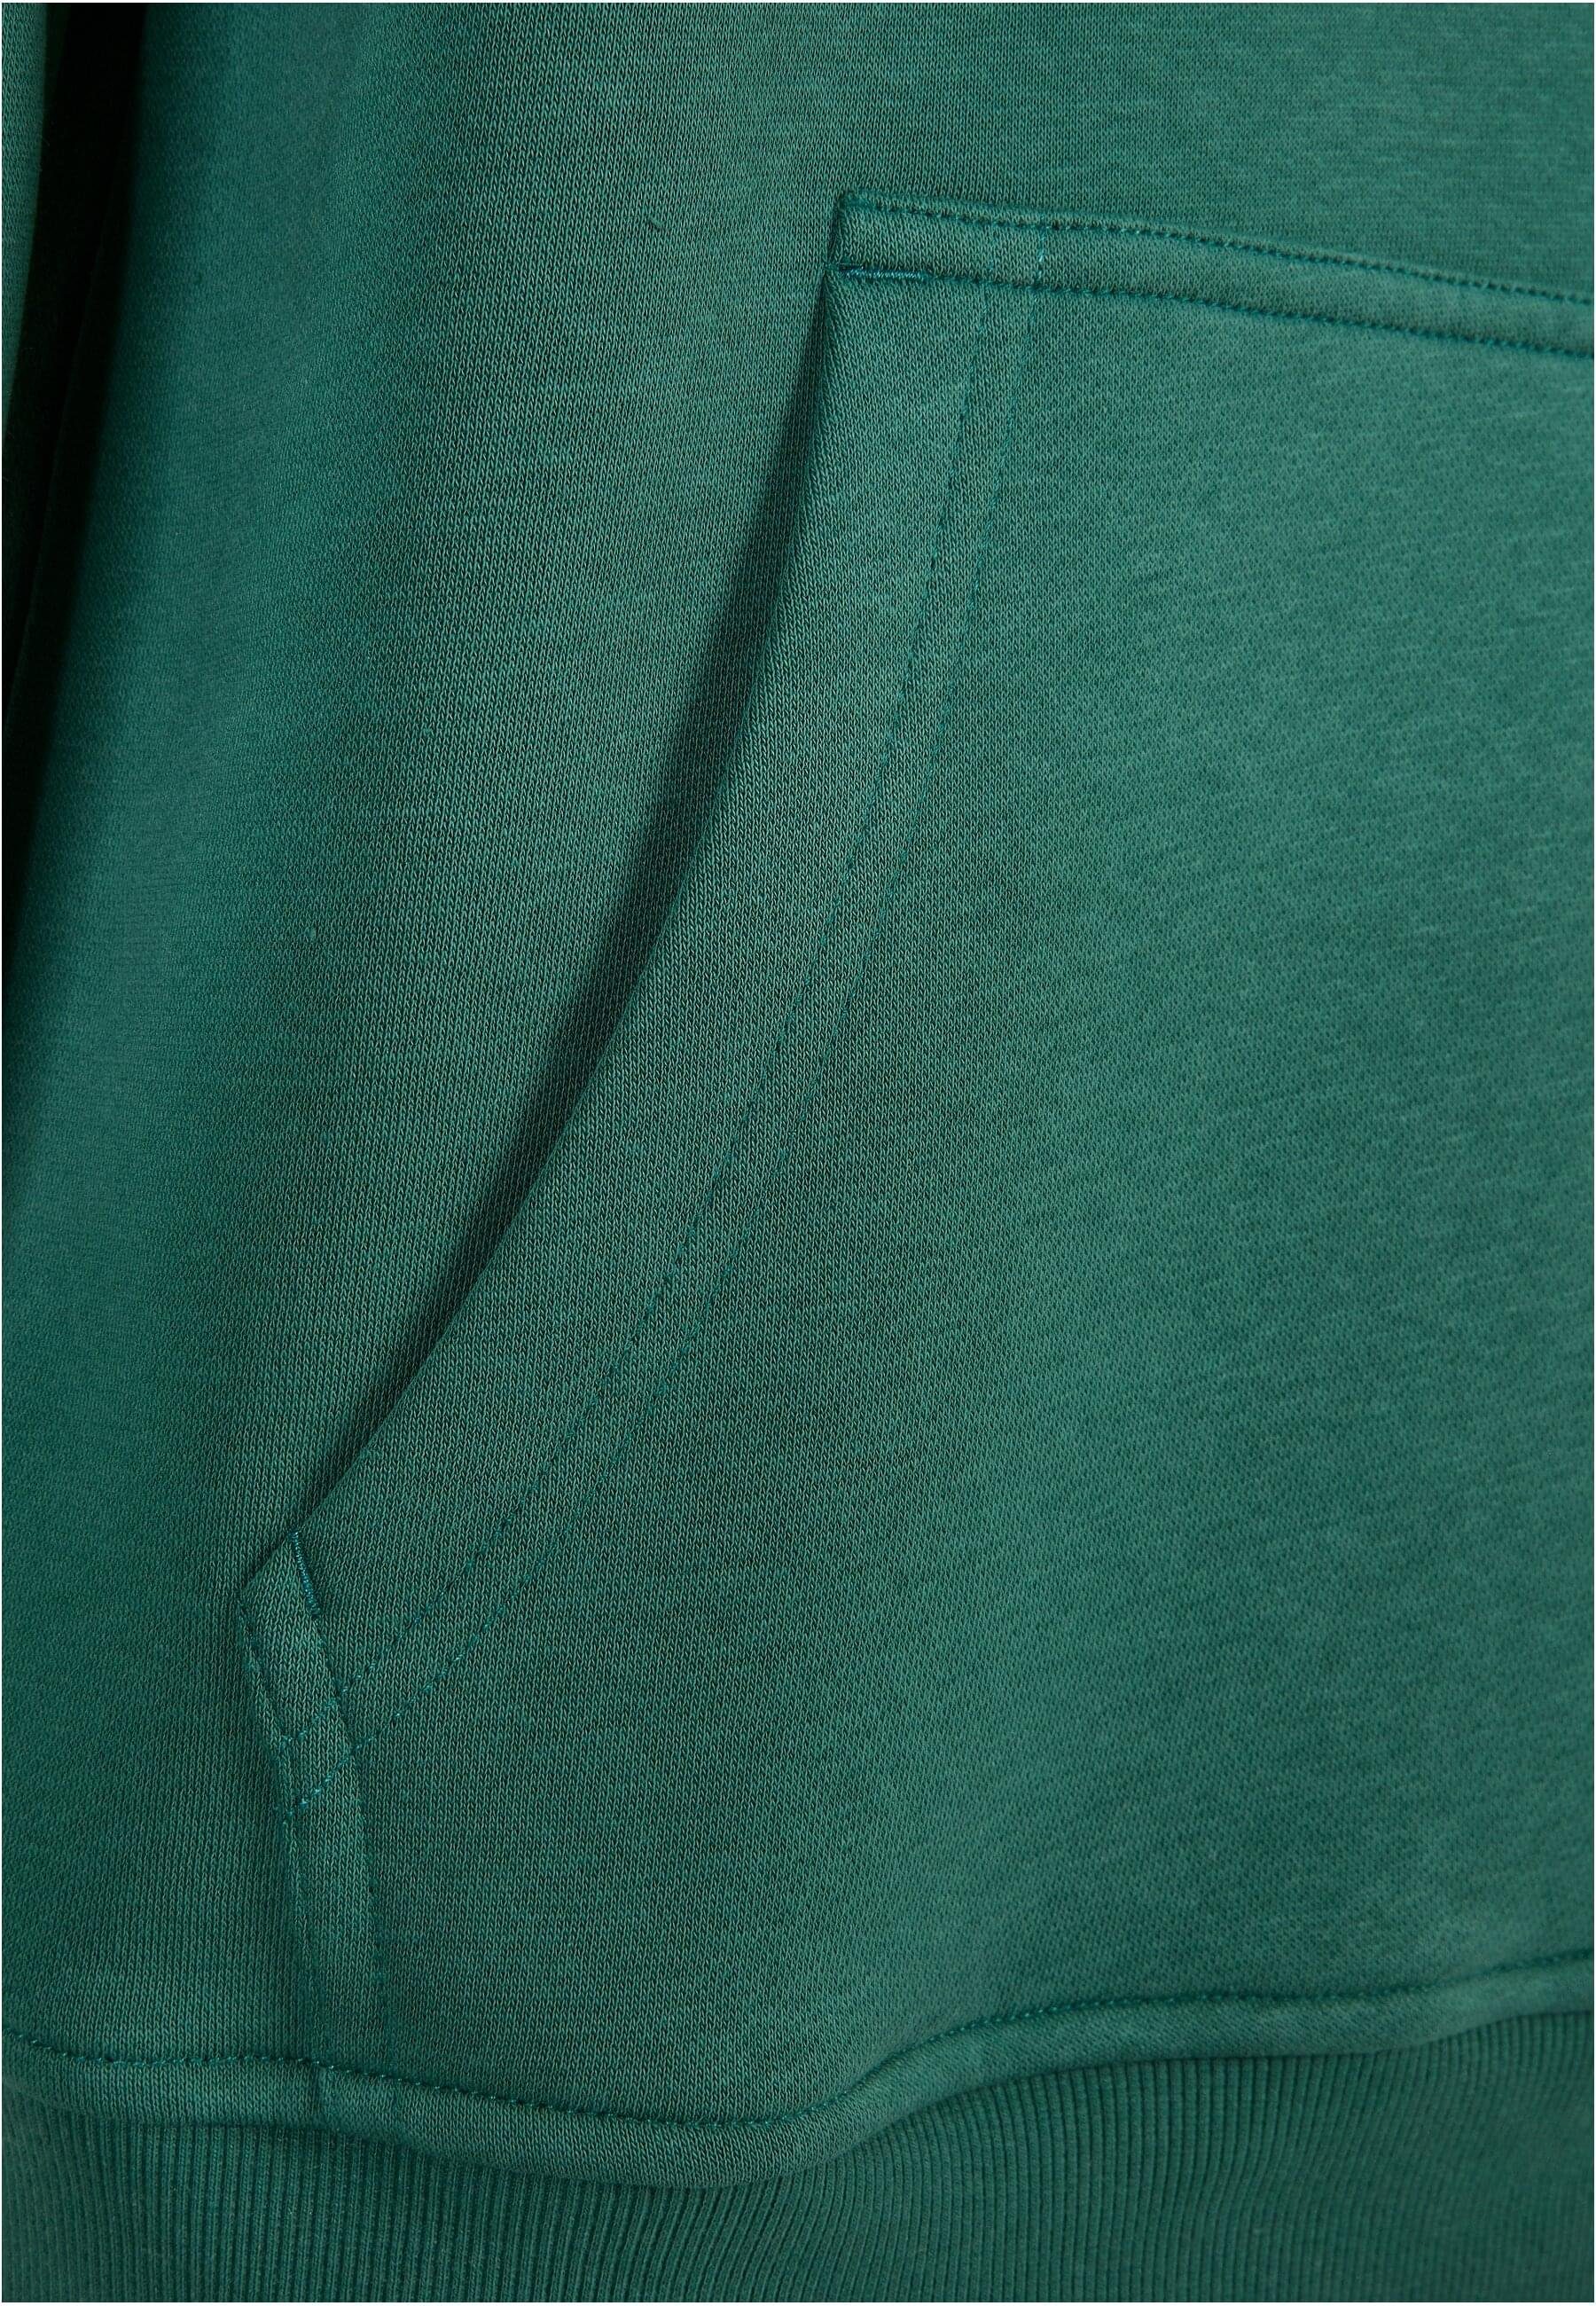 Black Starter (1-tlg) Herren Label Essential darkfreshgreen Hoody Starter Sweater Starter